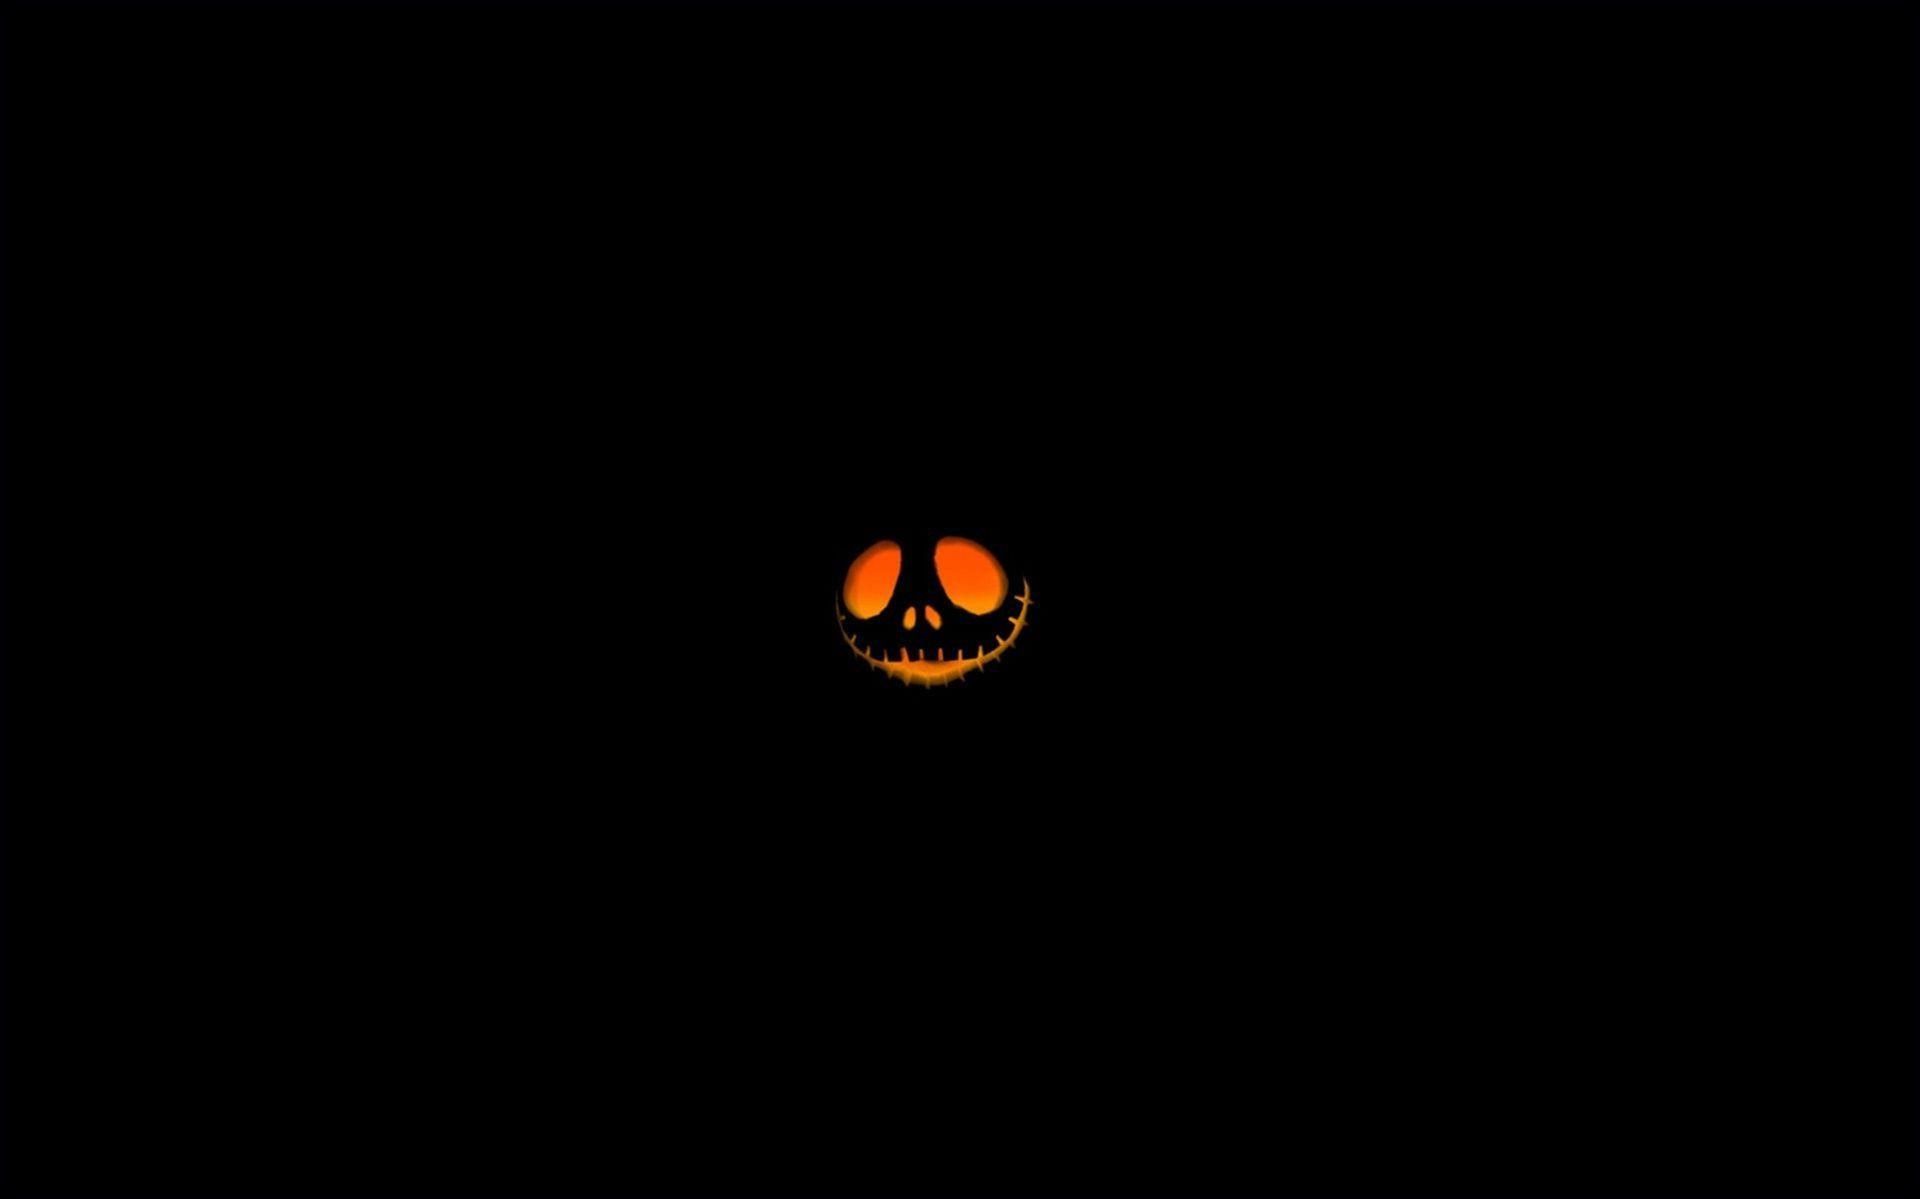 Scary pumpkin face in the dark - Halloween